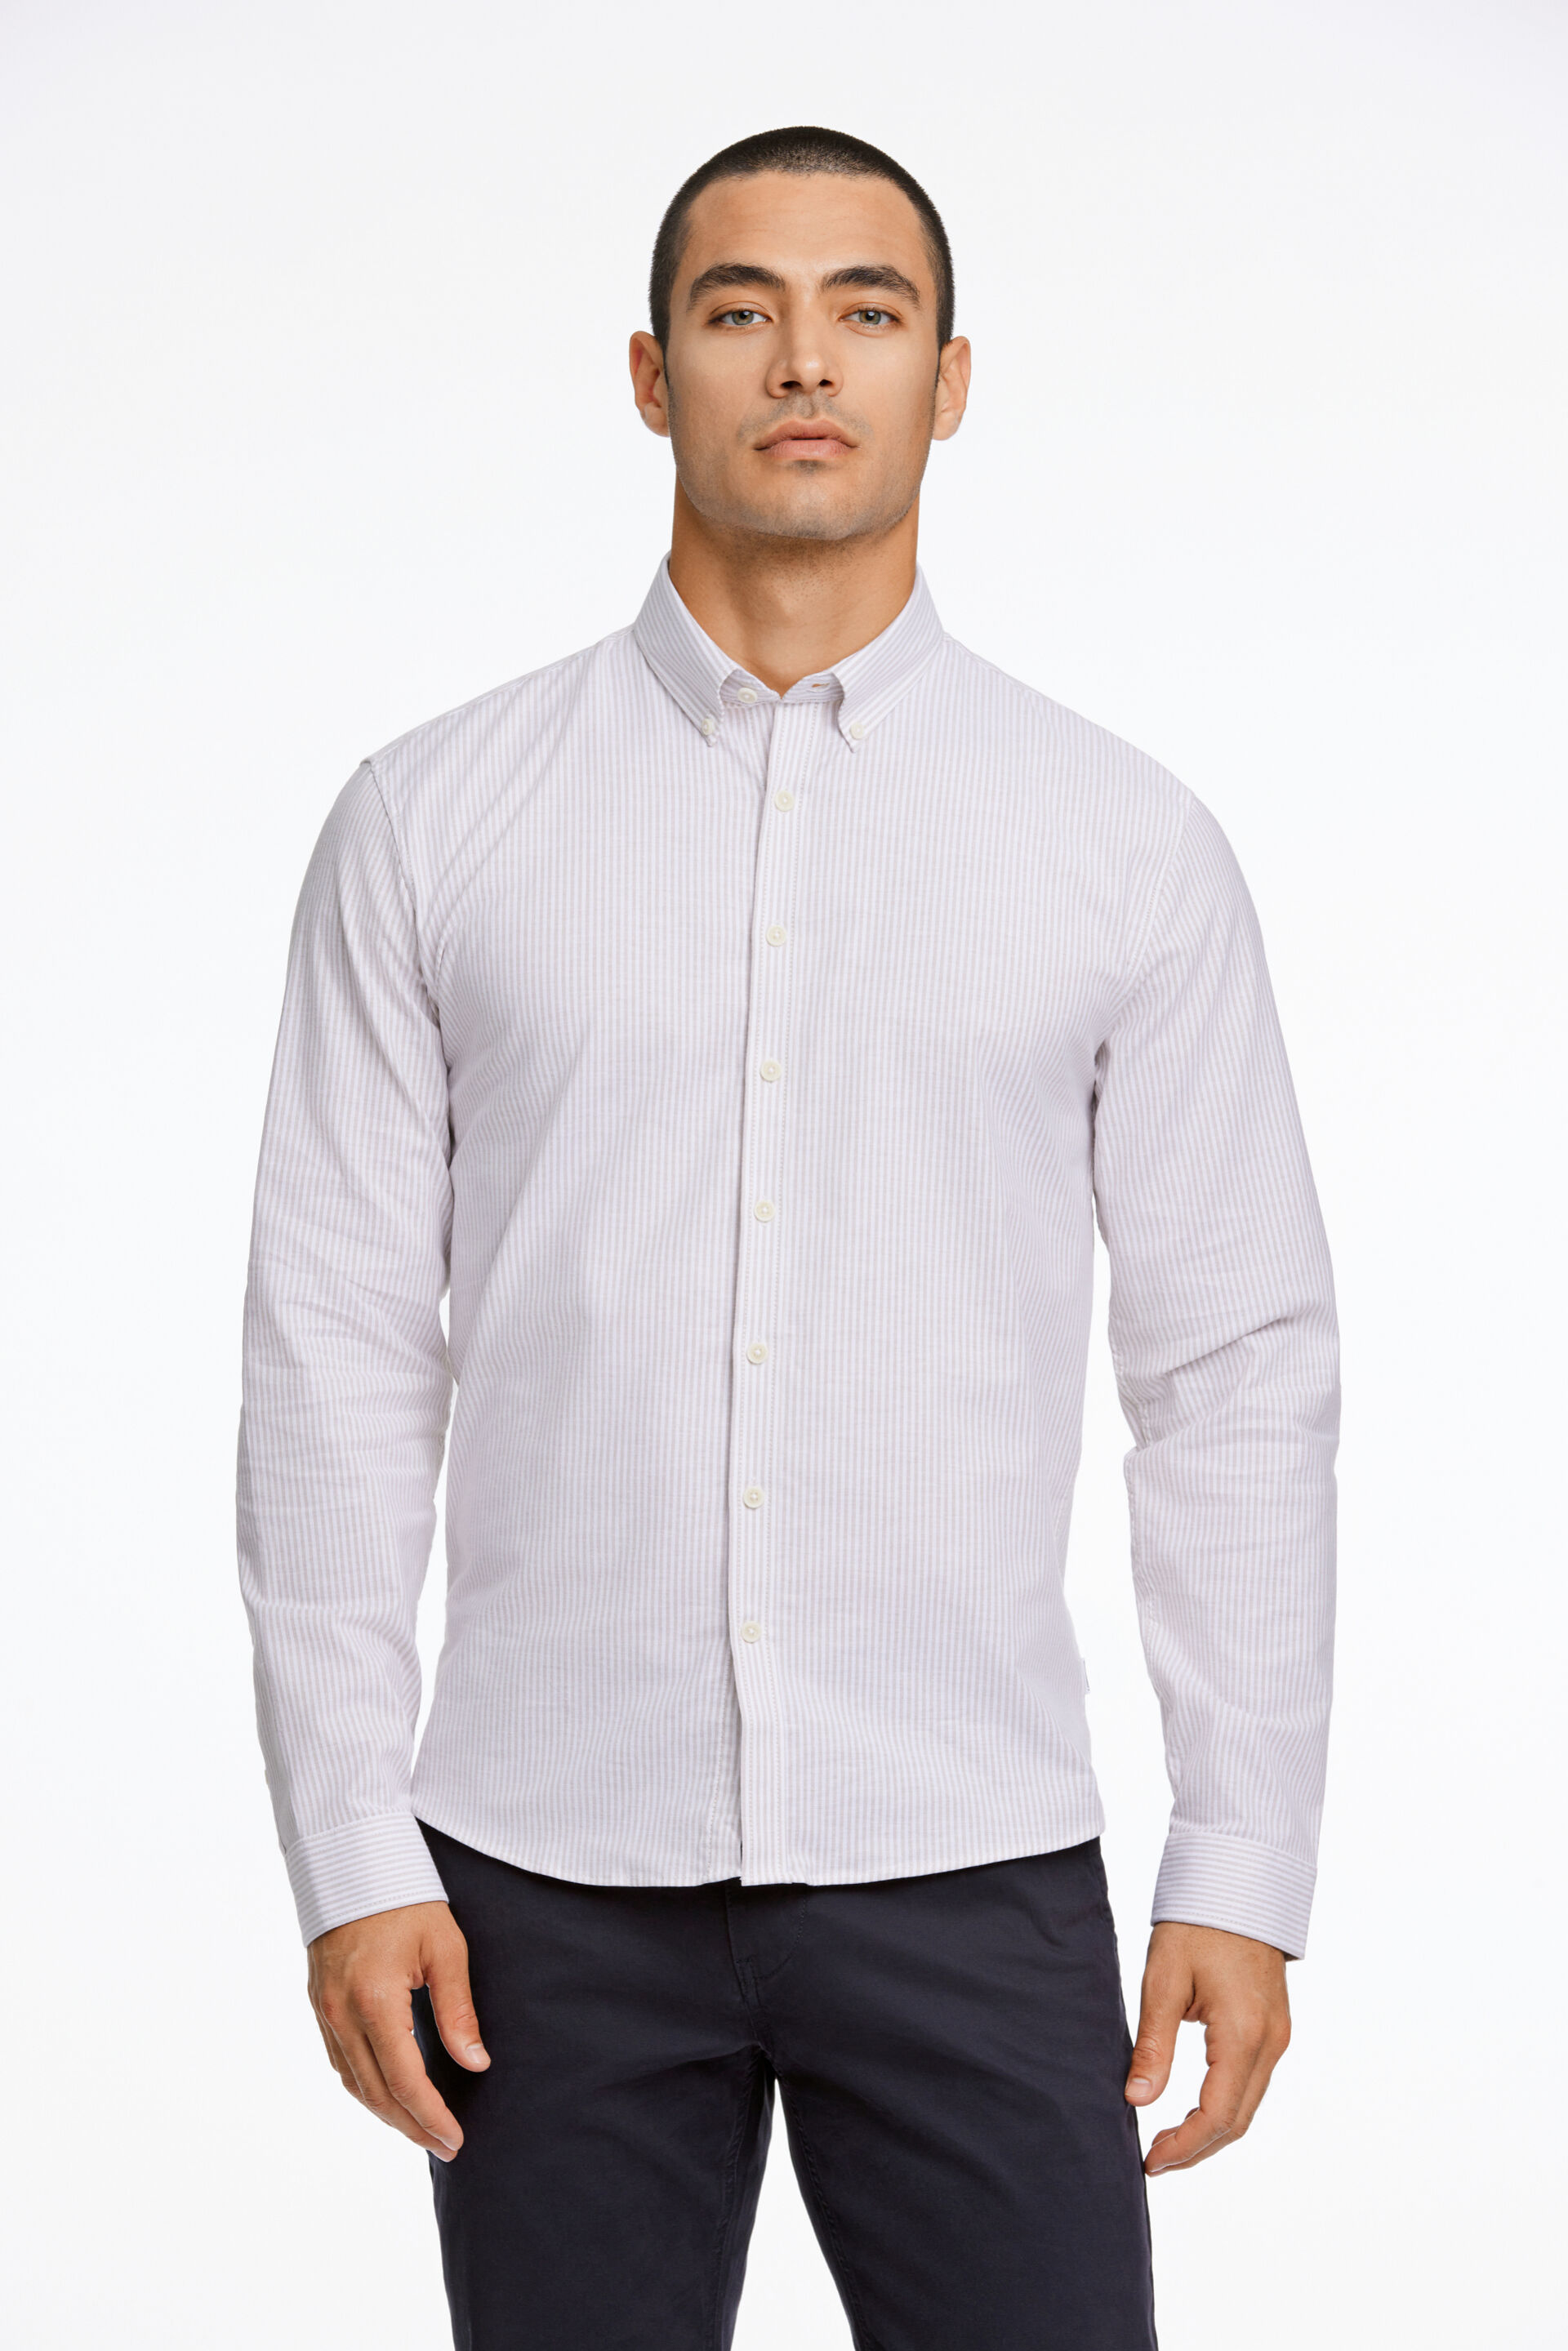 Oxford shirt 30-203296